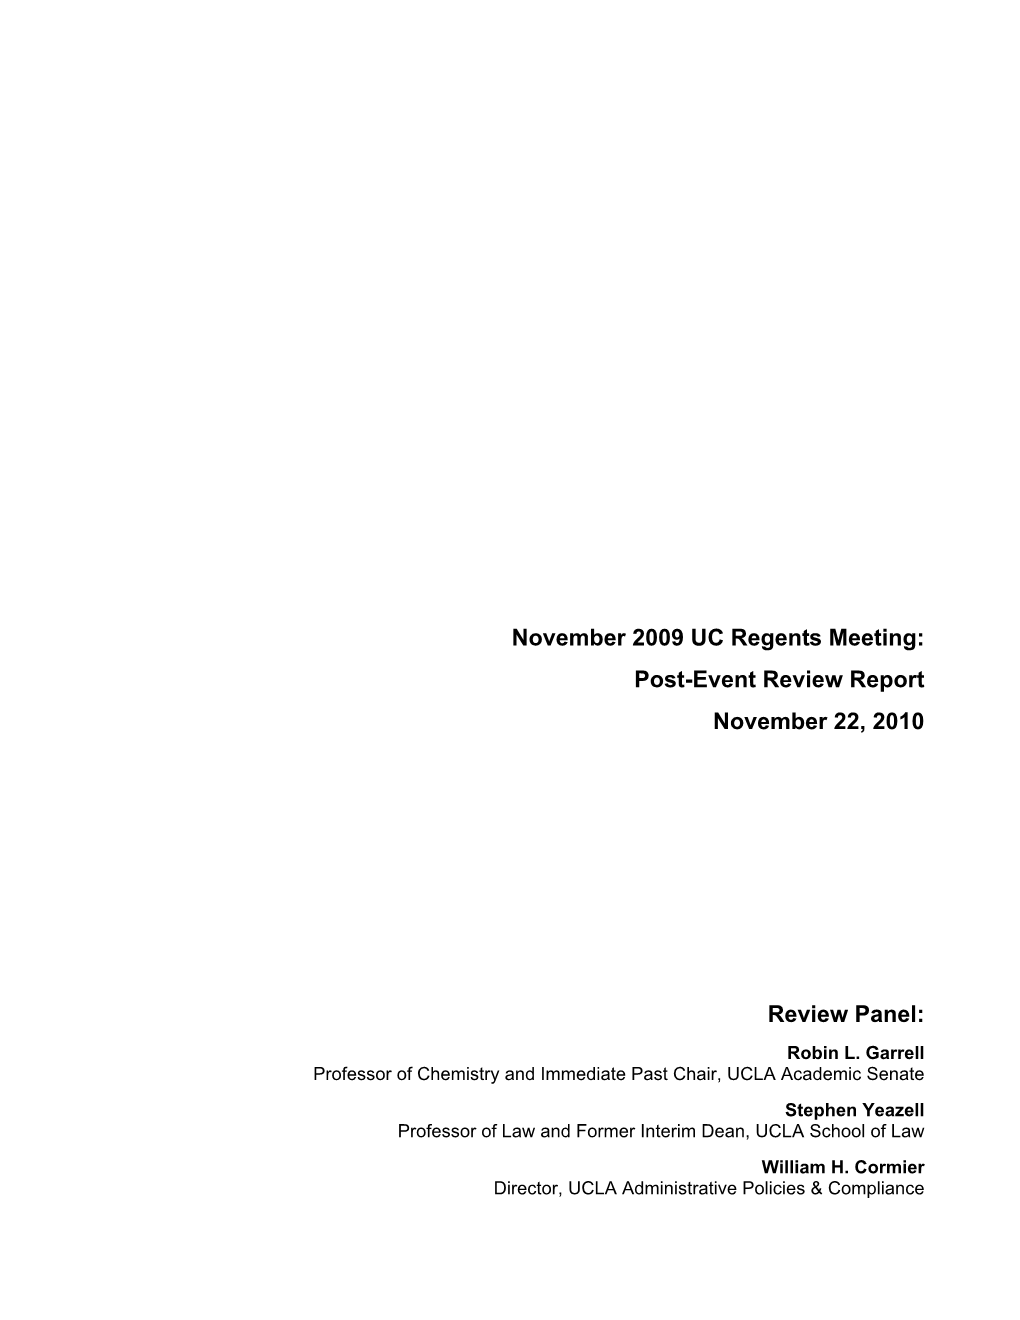 November 2009 UC Regents Meeting: Post-Event Review Report November 22, 2010